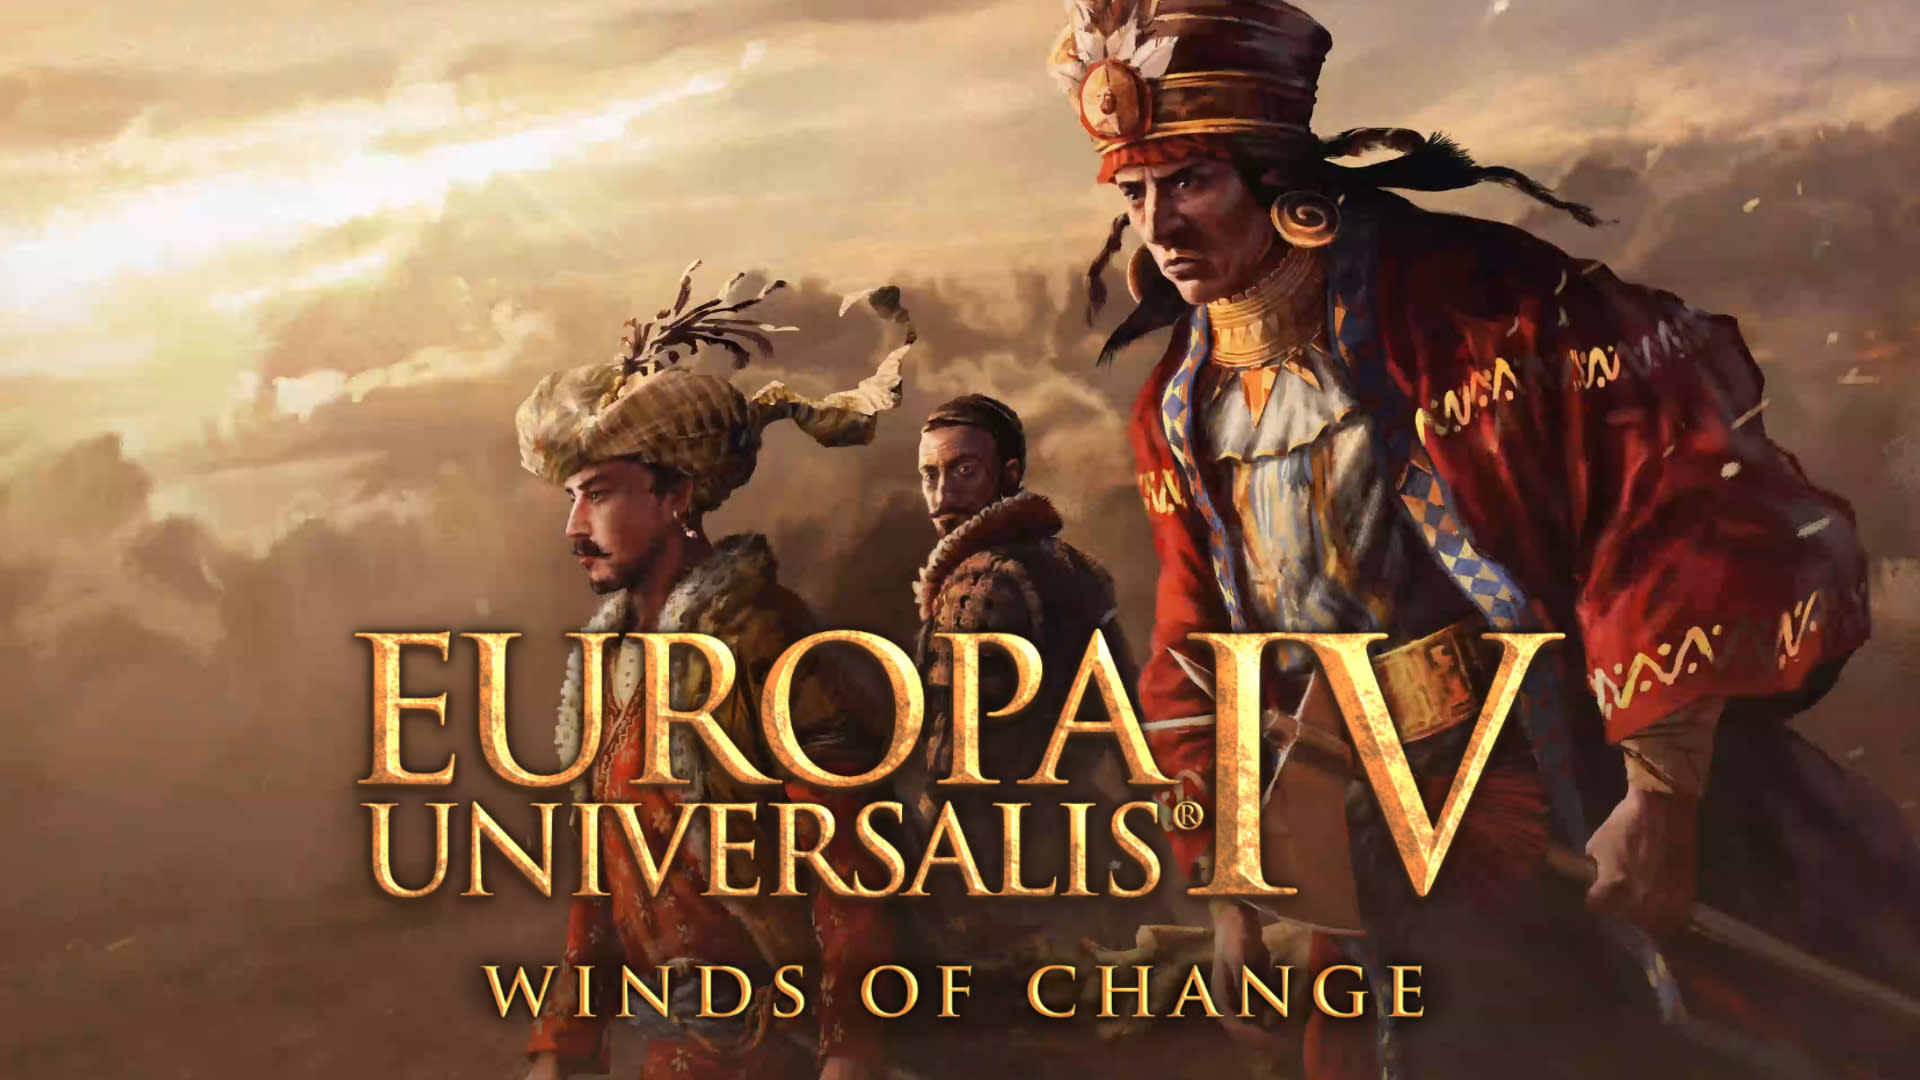 Europa Universalis IV Winds of Change loop still image1